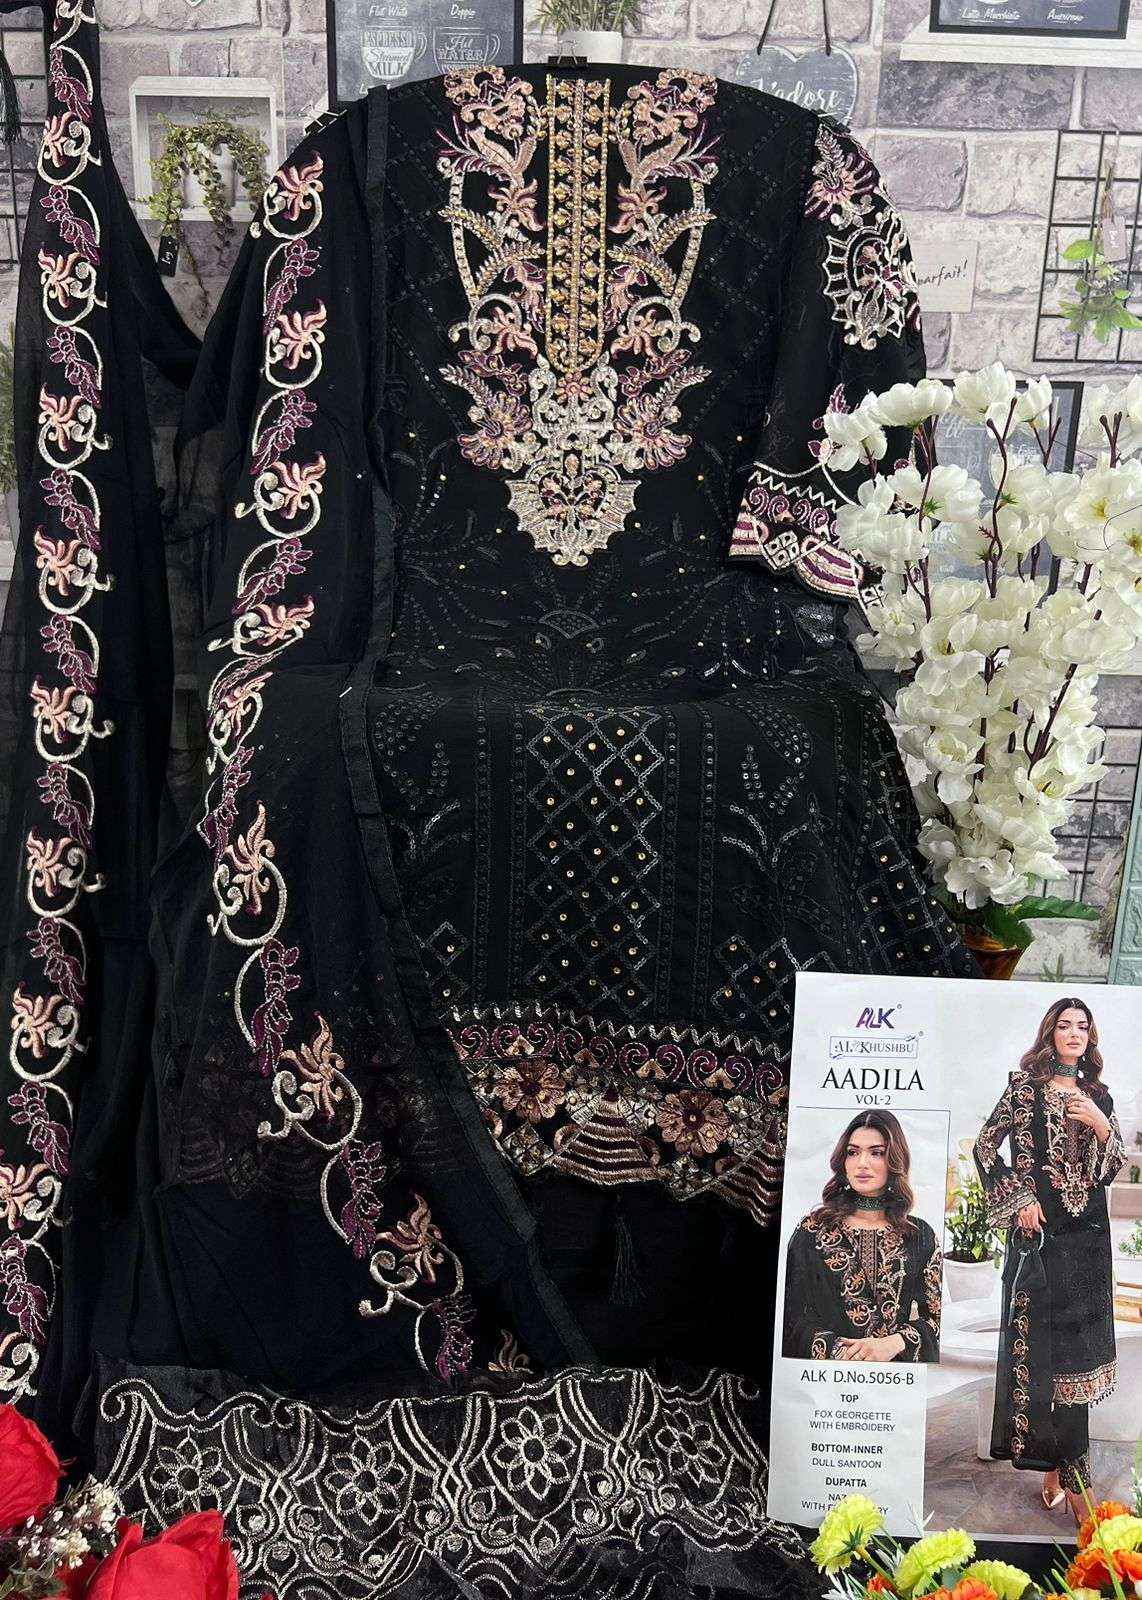 AL Khushbu Aadila Vol 2 Georgette Dress Material 4 pcs Catalogue